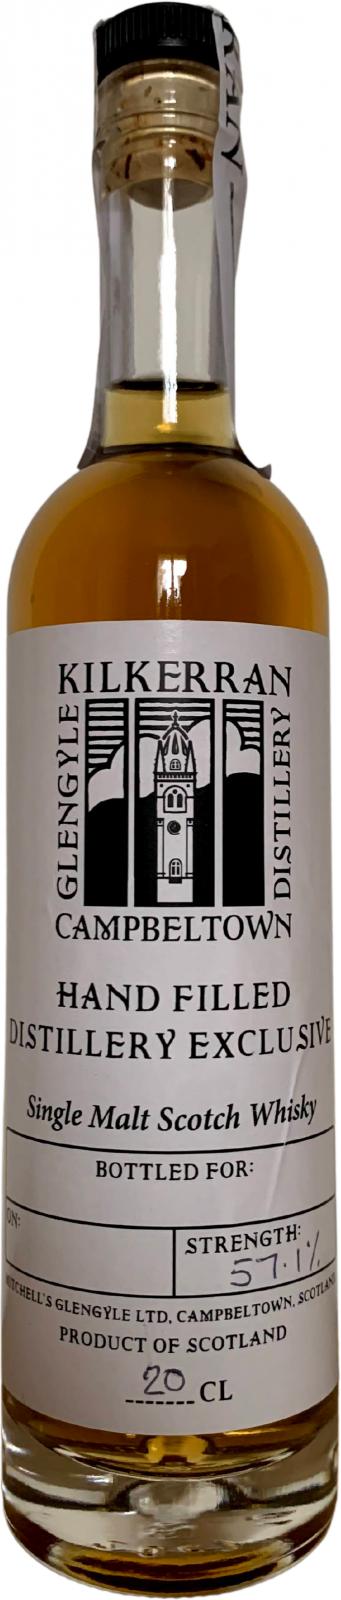 Kilkerran Hand Filled Distillery Exclusive